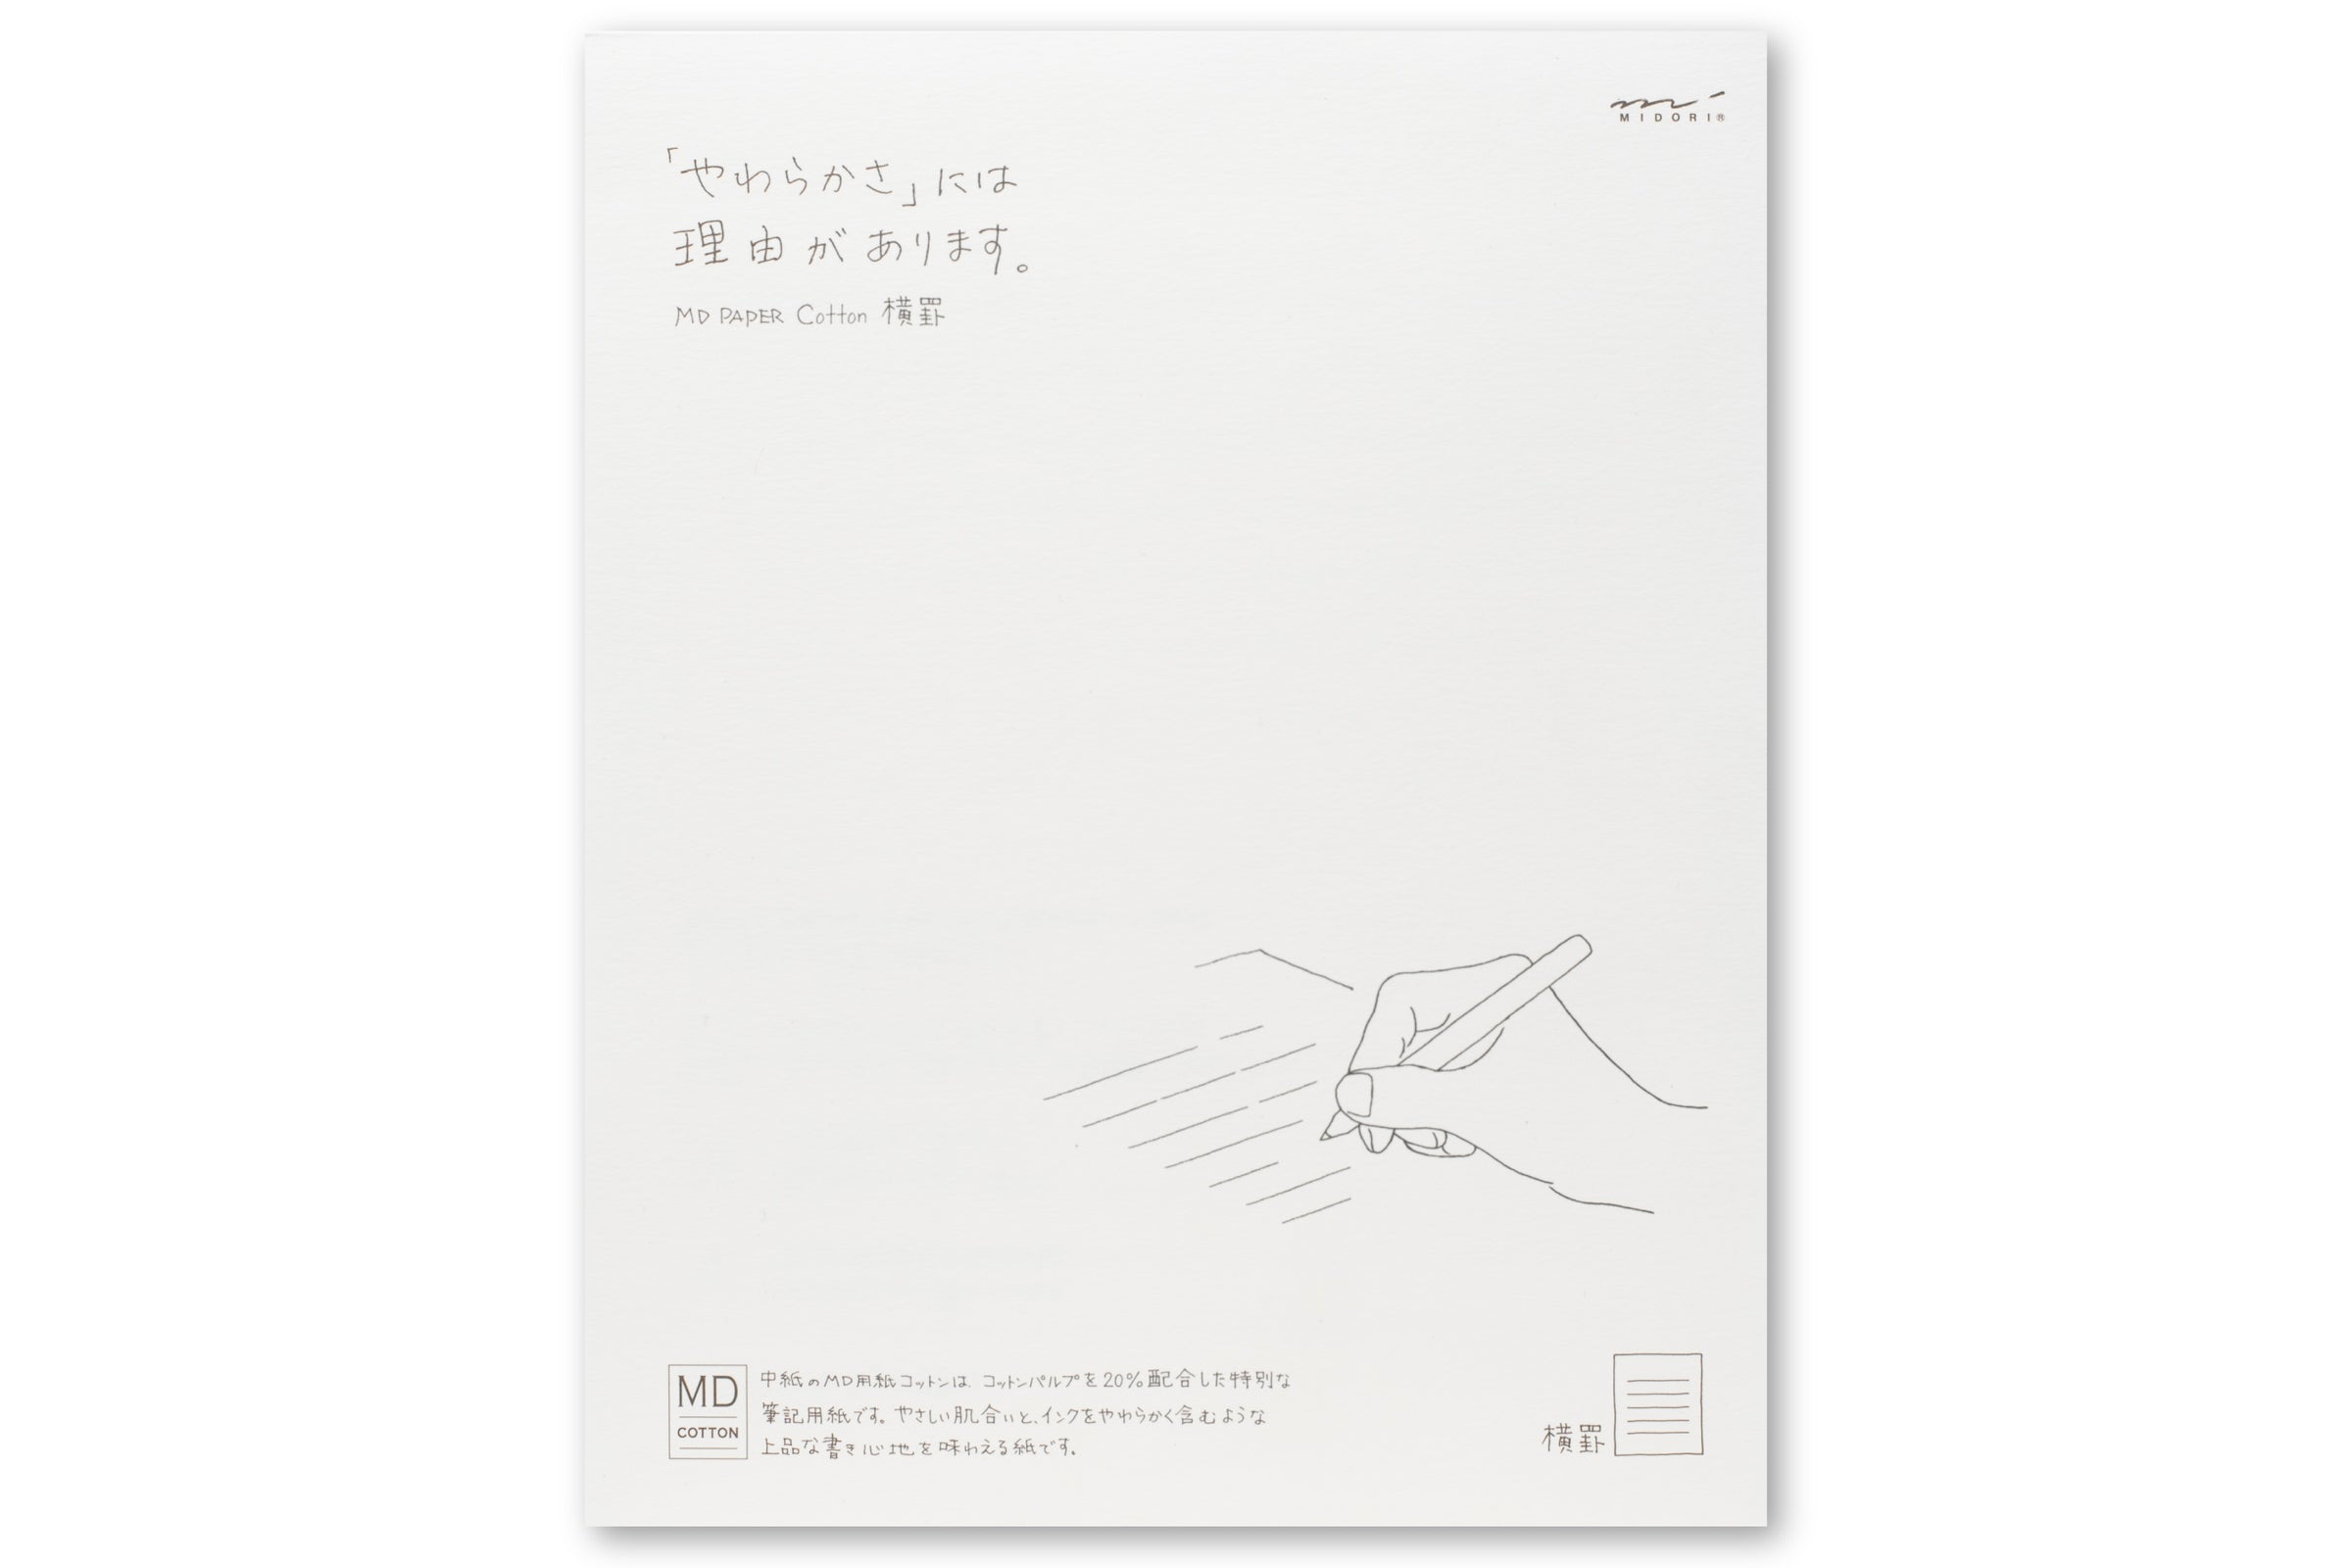 Midori Letter Set - 763 - Assorted